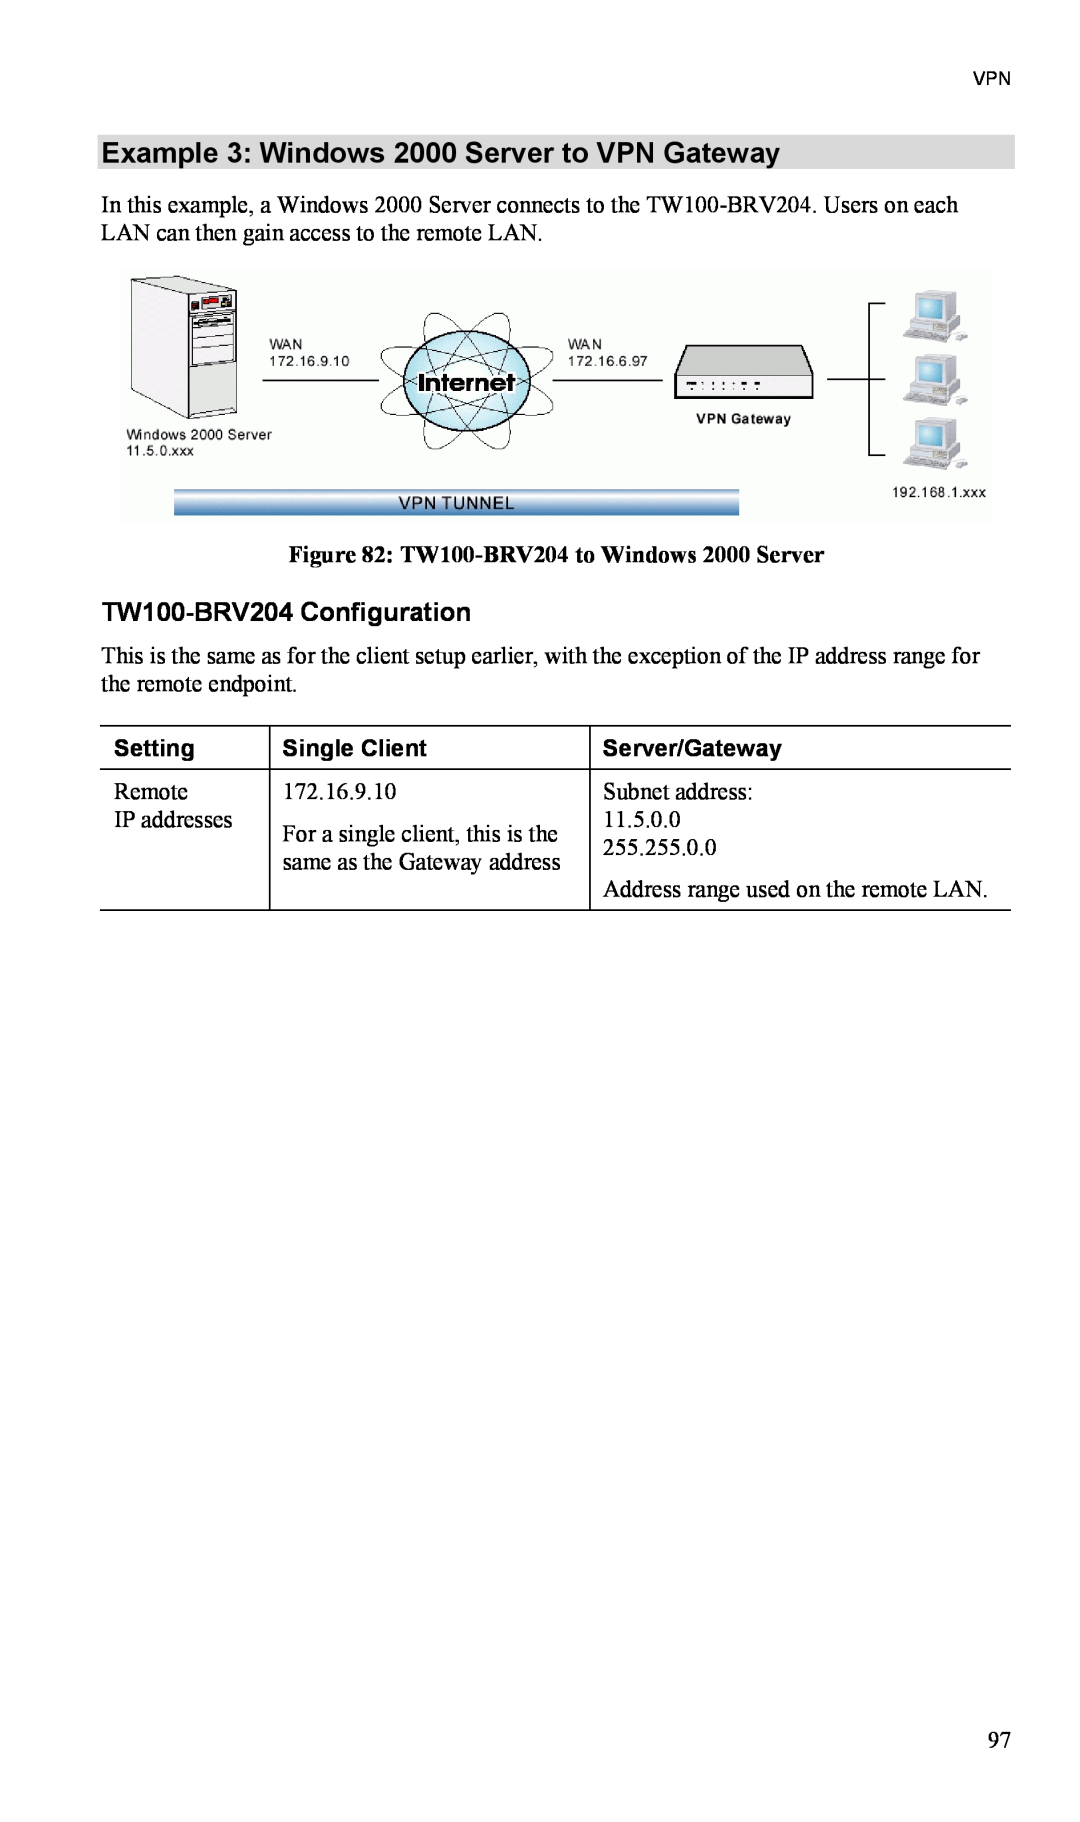 TRENDnet Example 3 Windows 2000 Server to VPN Gateway, TW100-BRV204 to Windows 2000 Server, Setting, Single Client 